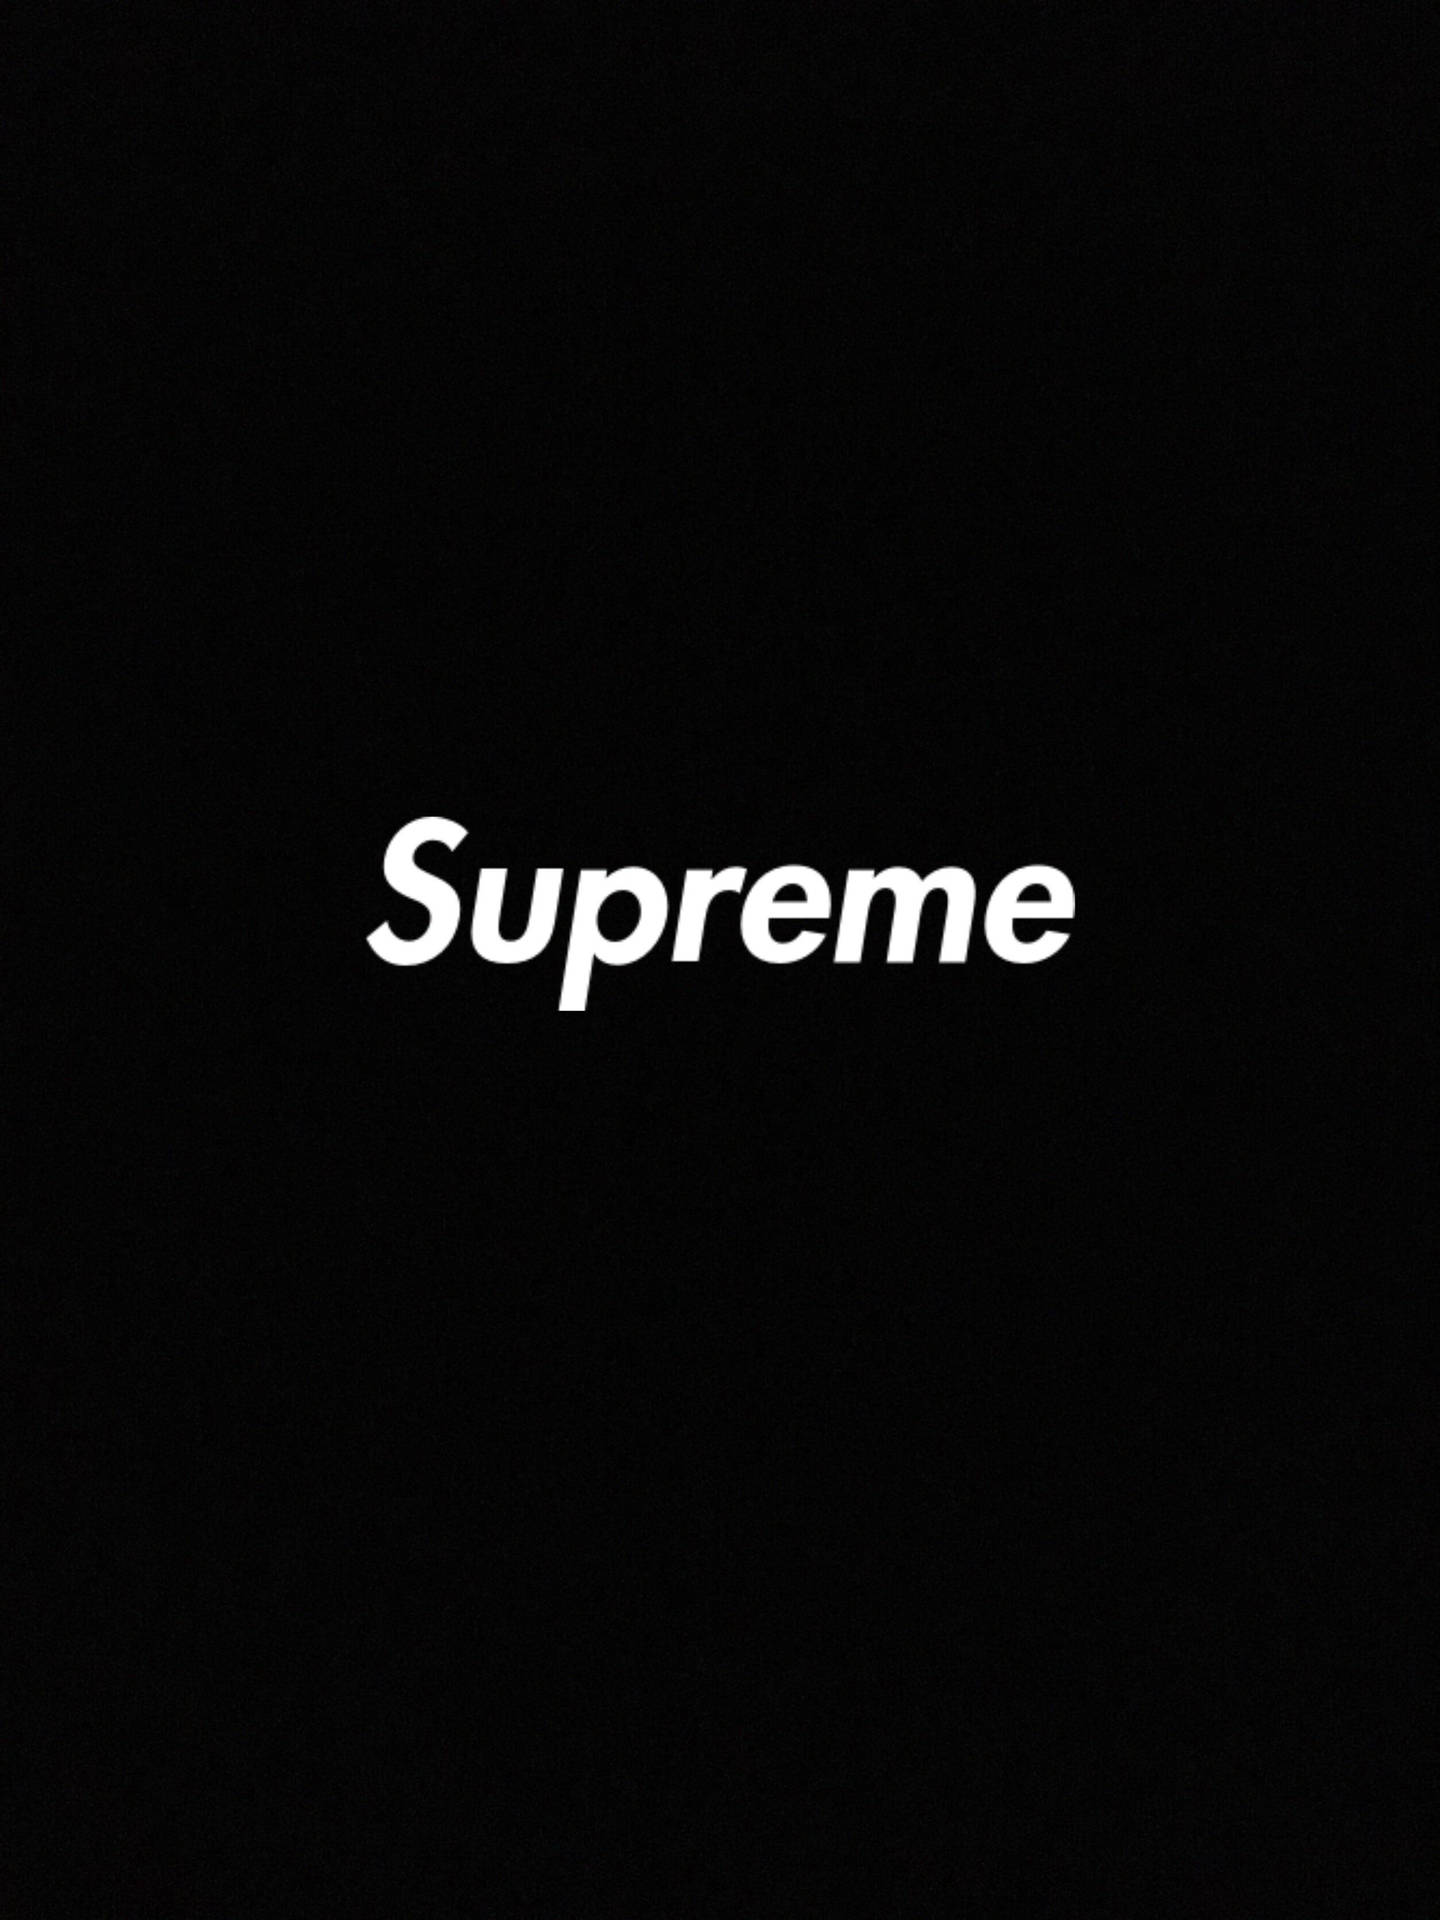 Supreme Logo Cool Black Background Wallpaper